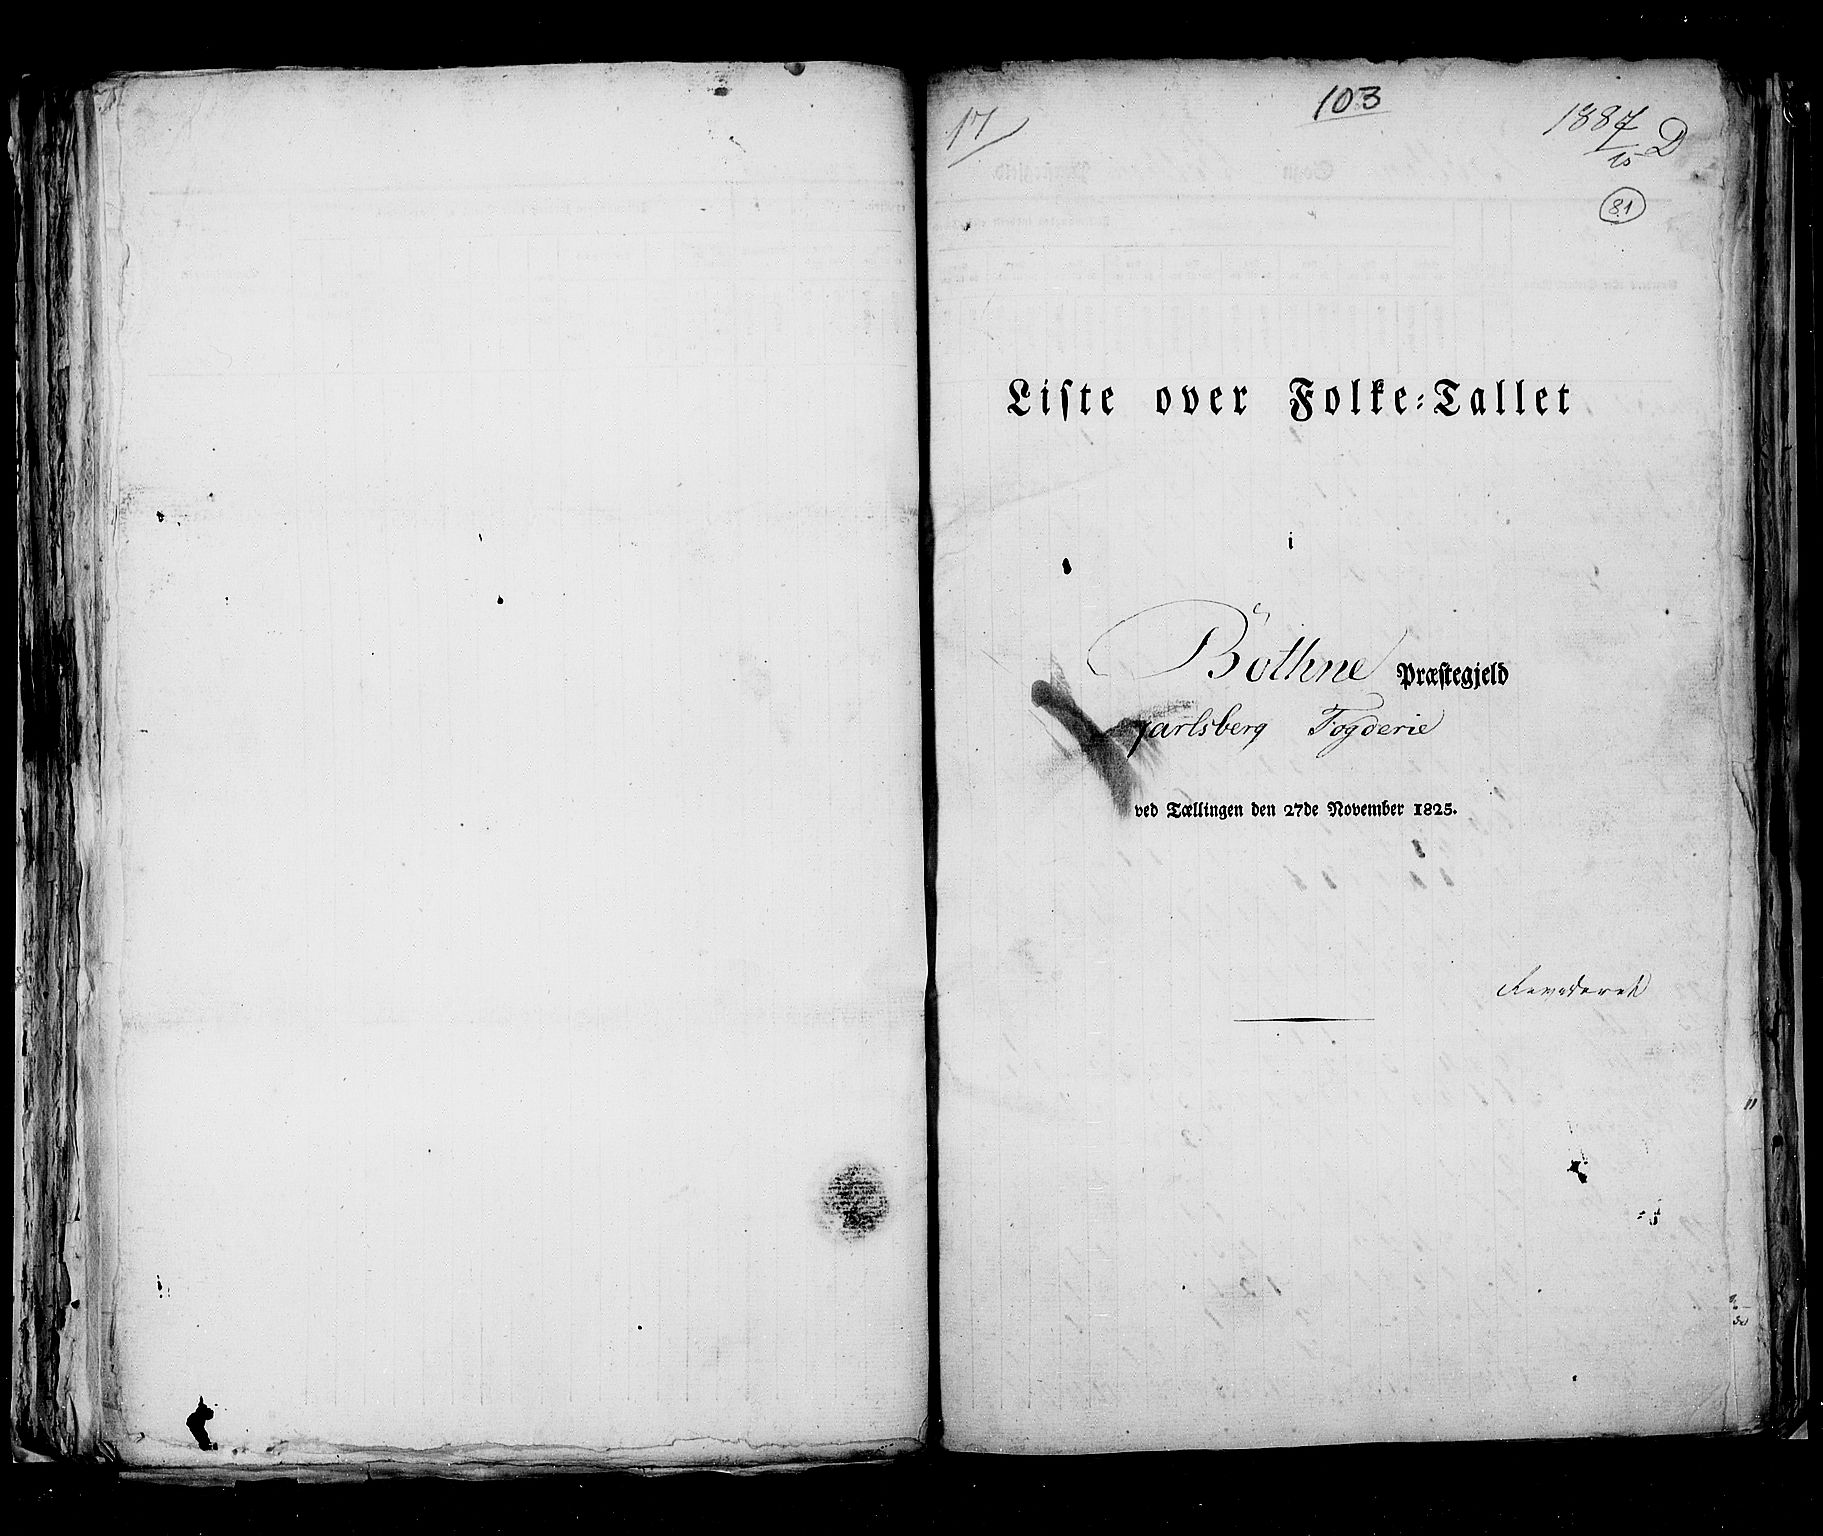 RA, Folketellingen 1825, bind 8: Jarlsberg og Larvik amt, 1825, s. 81